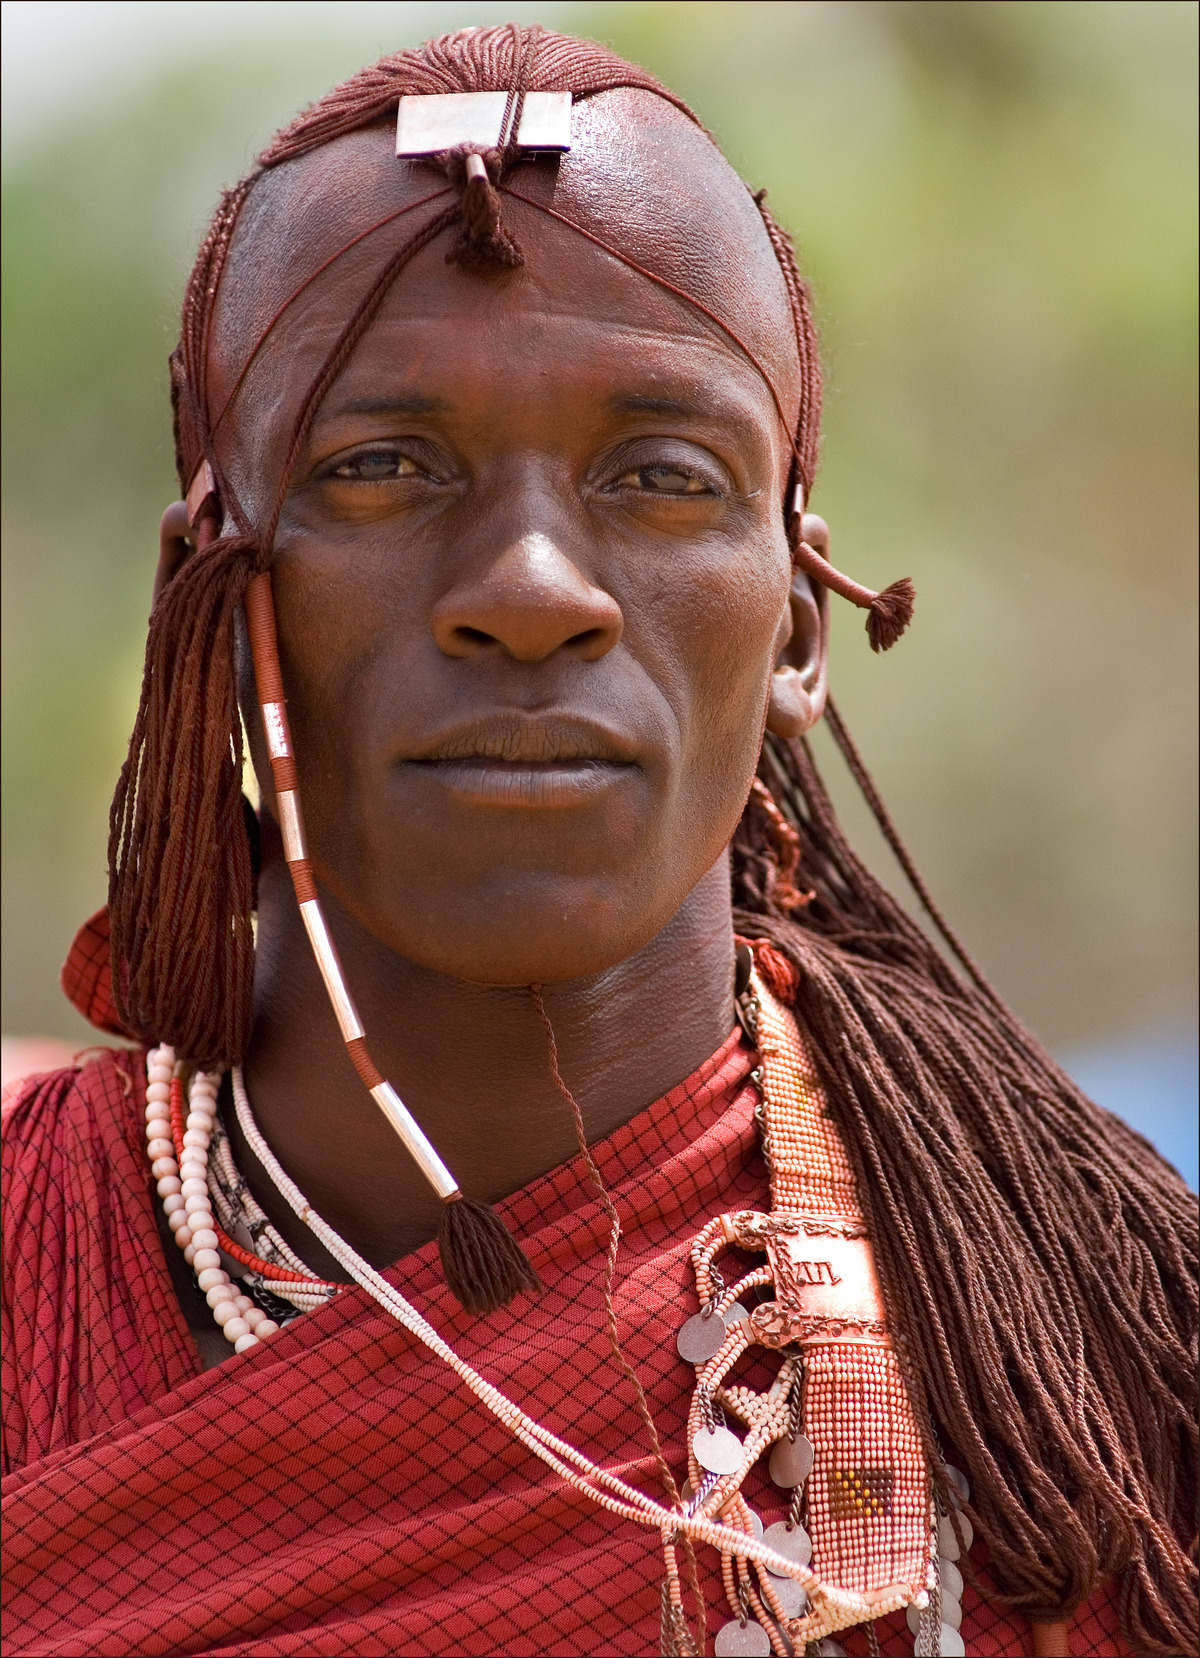 Maasai man with his dreadlocks